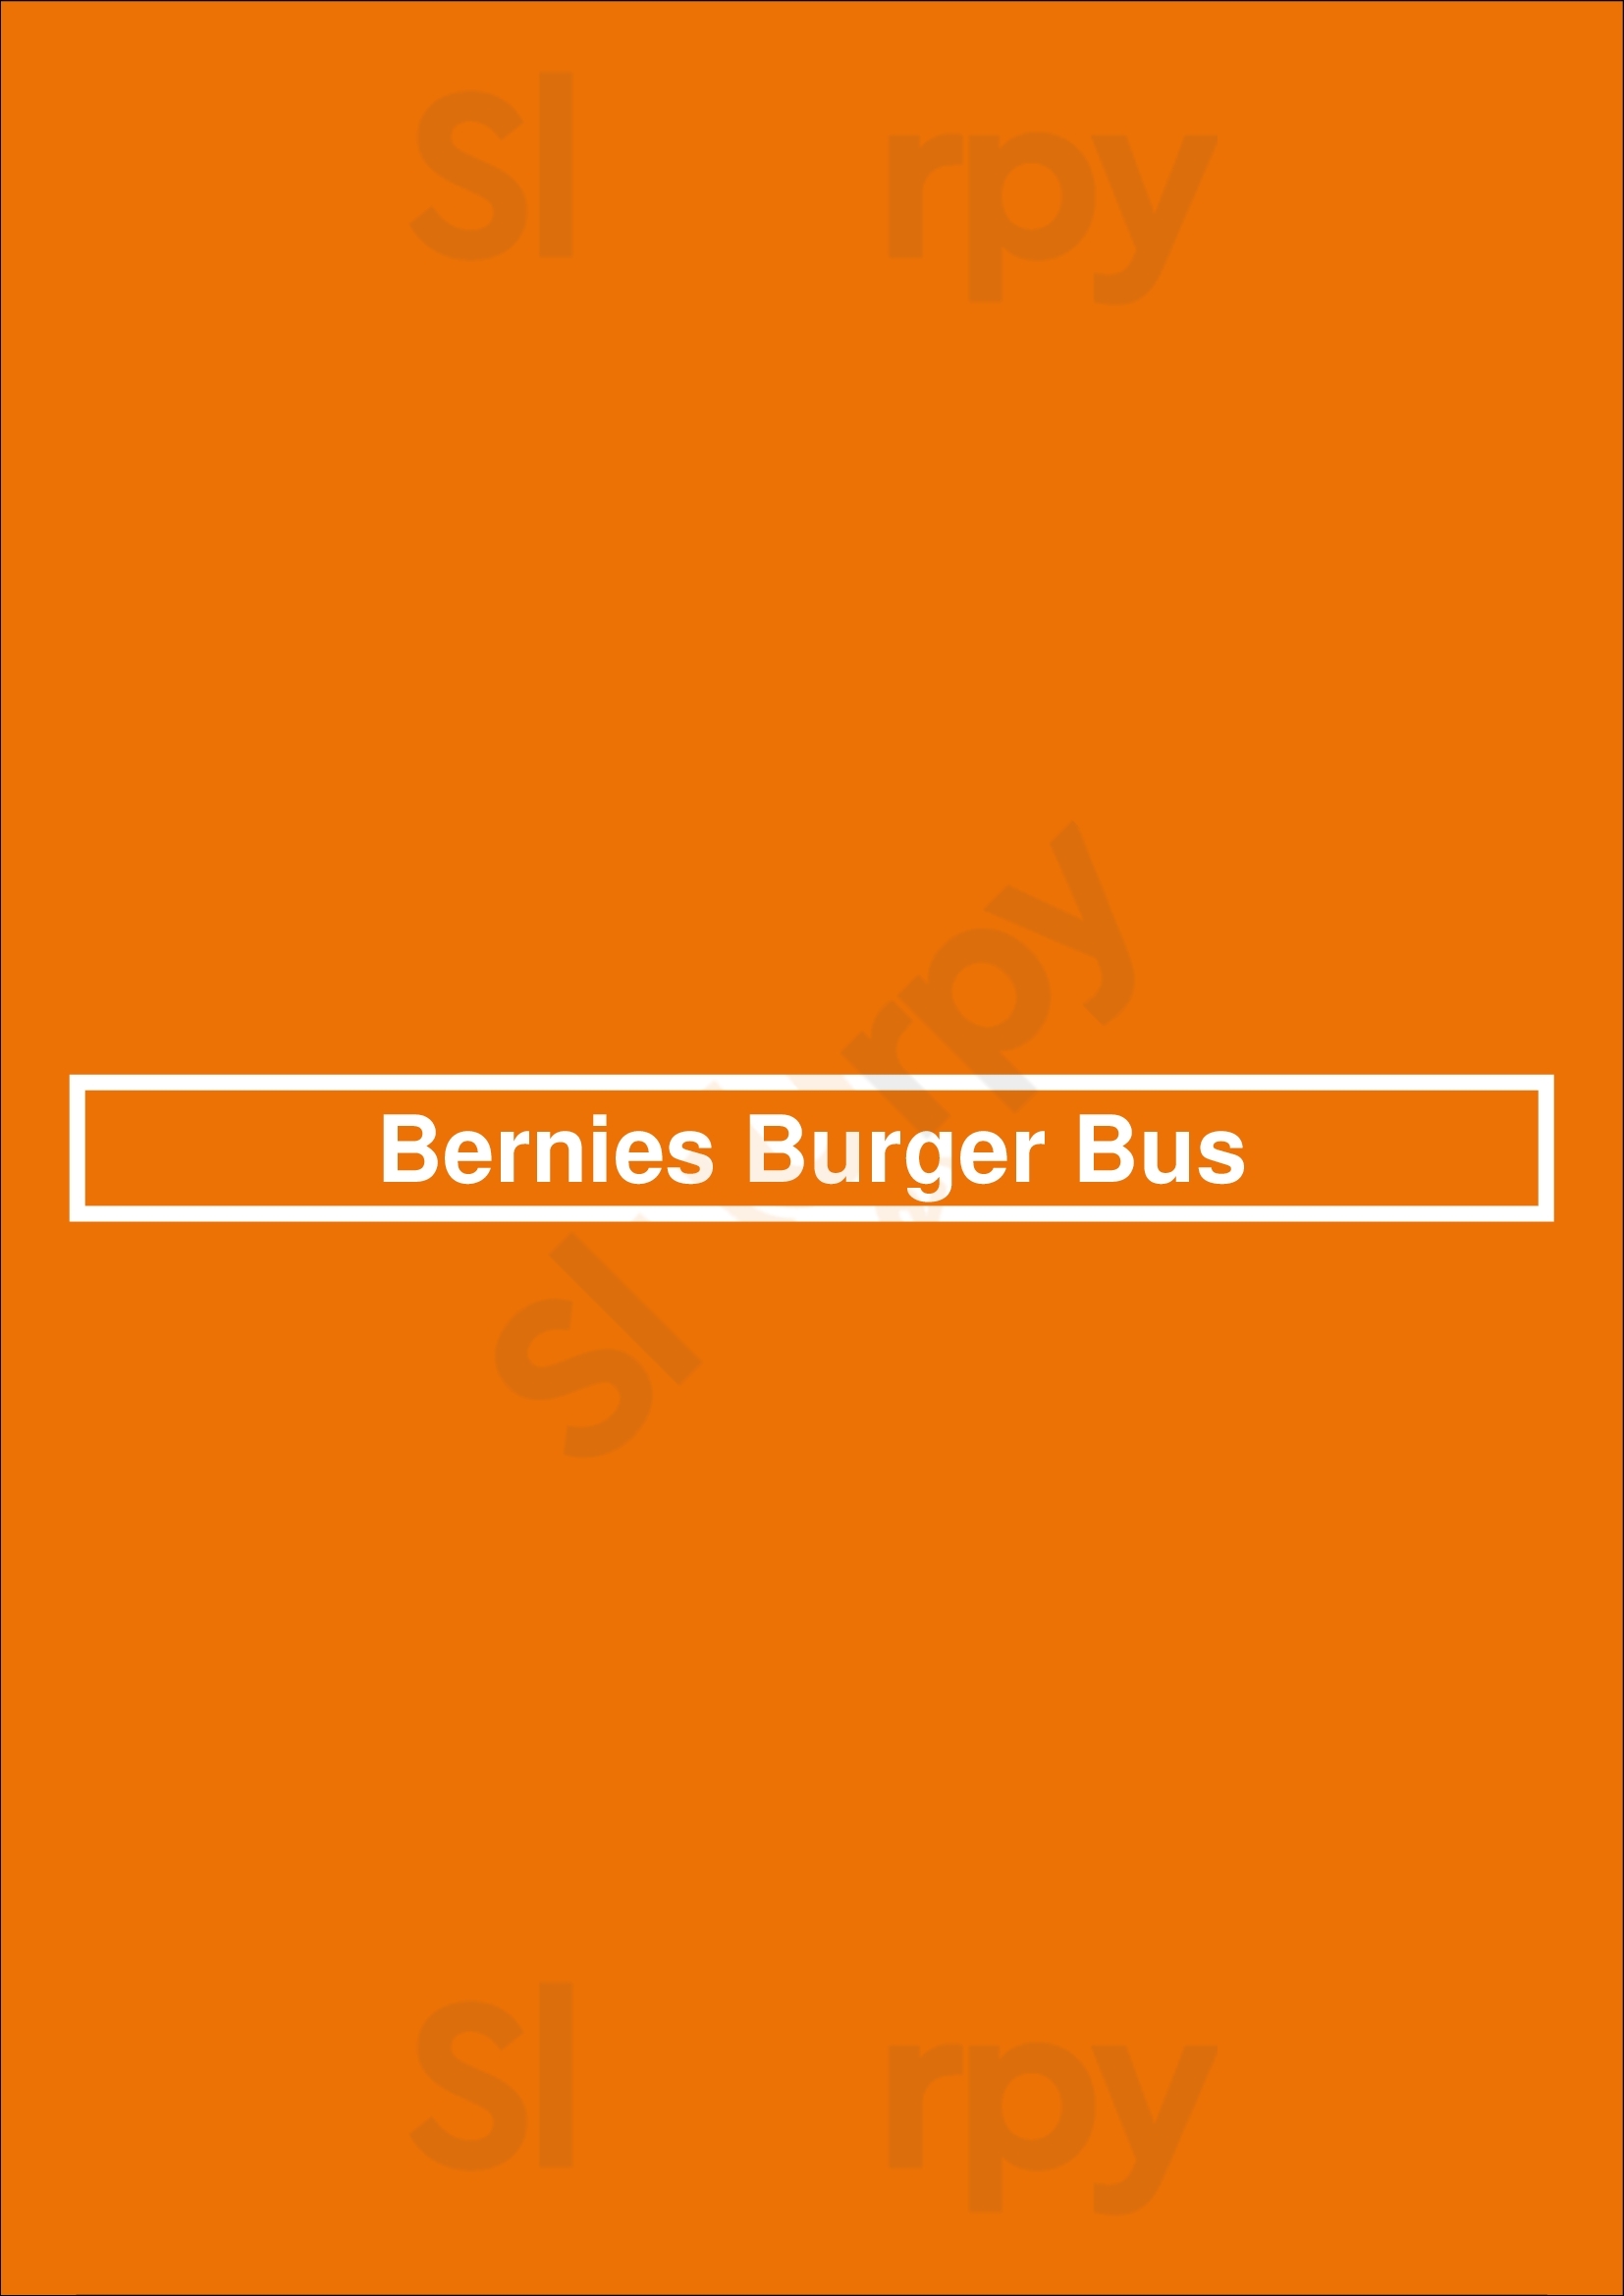 Bernies Burger Bus Houston Menu - 1